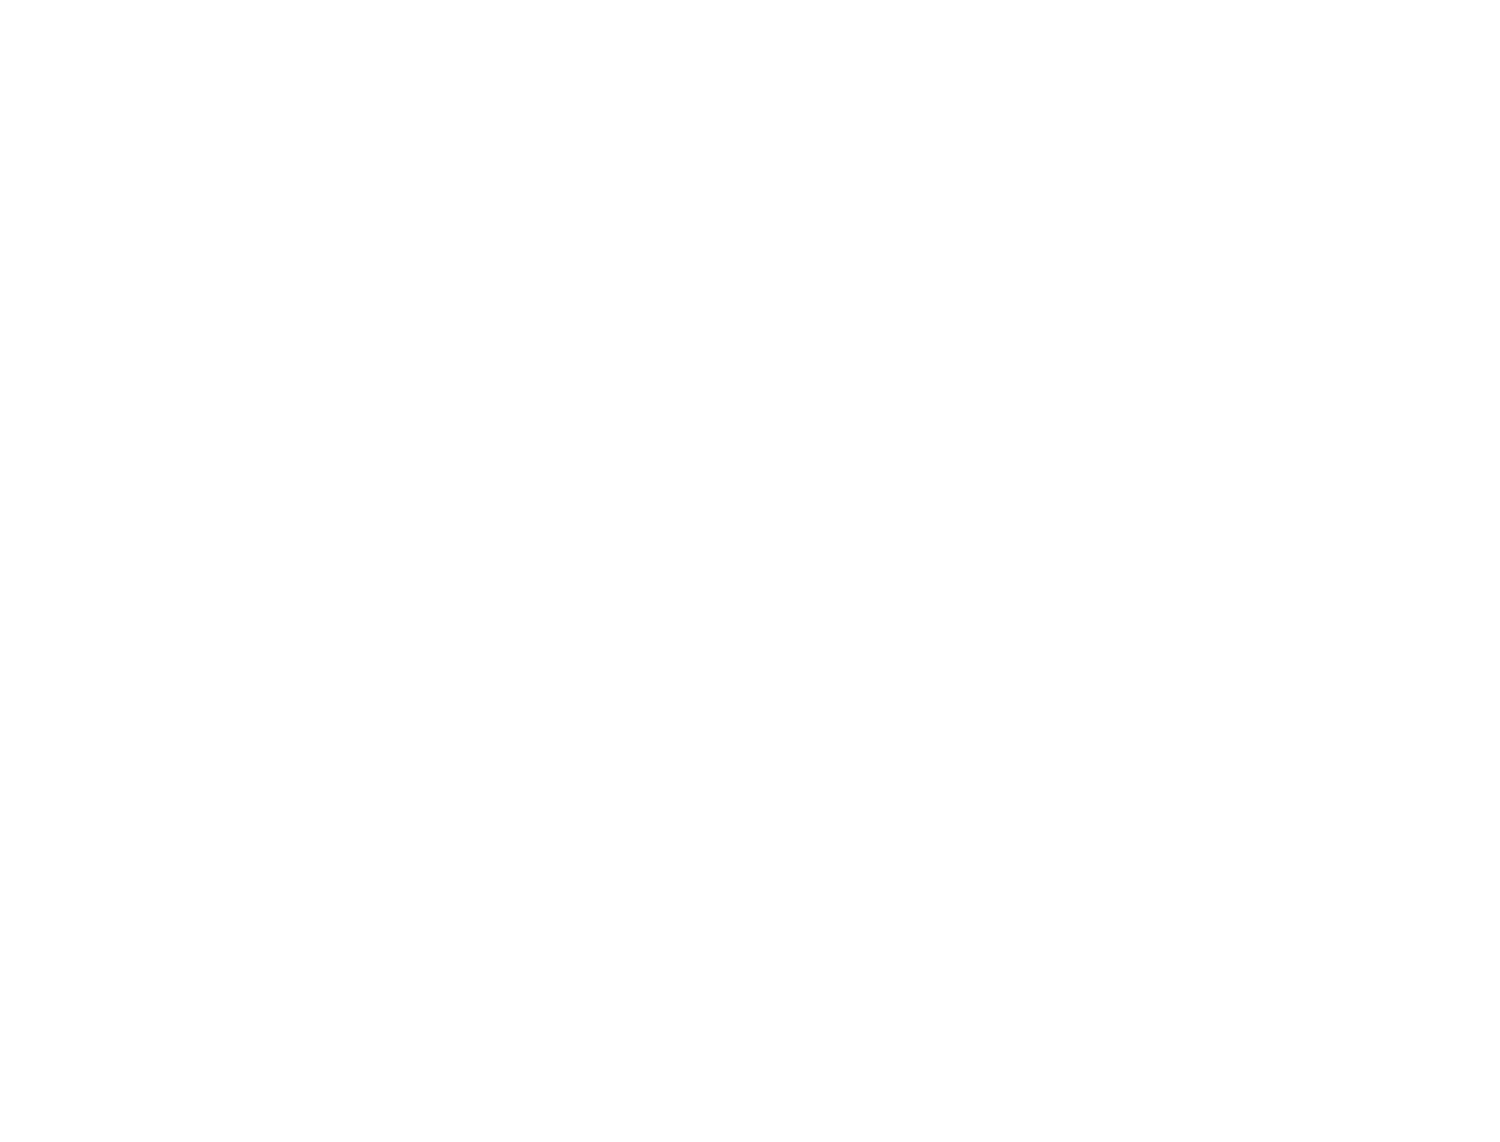 MPRINT